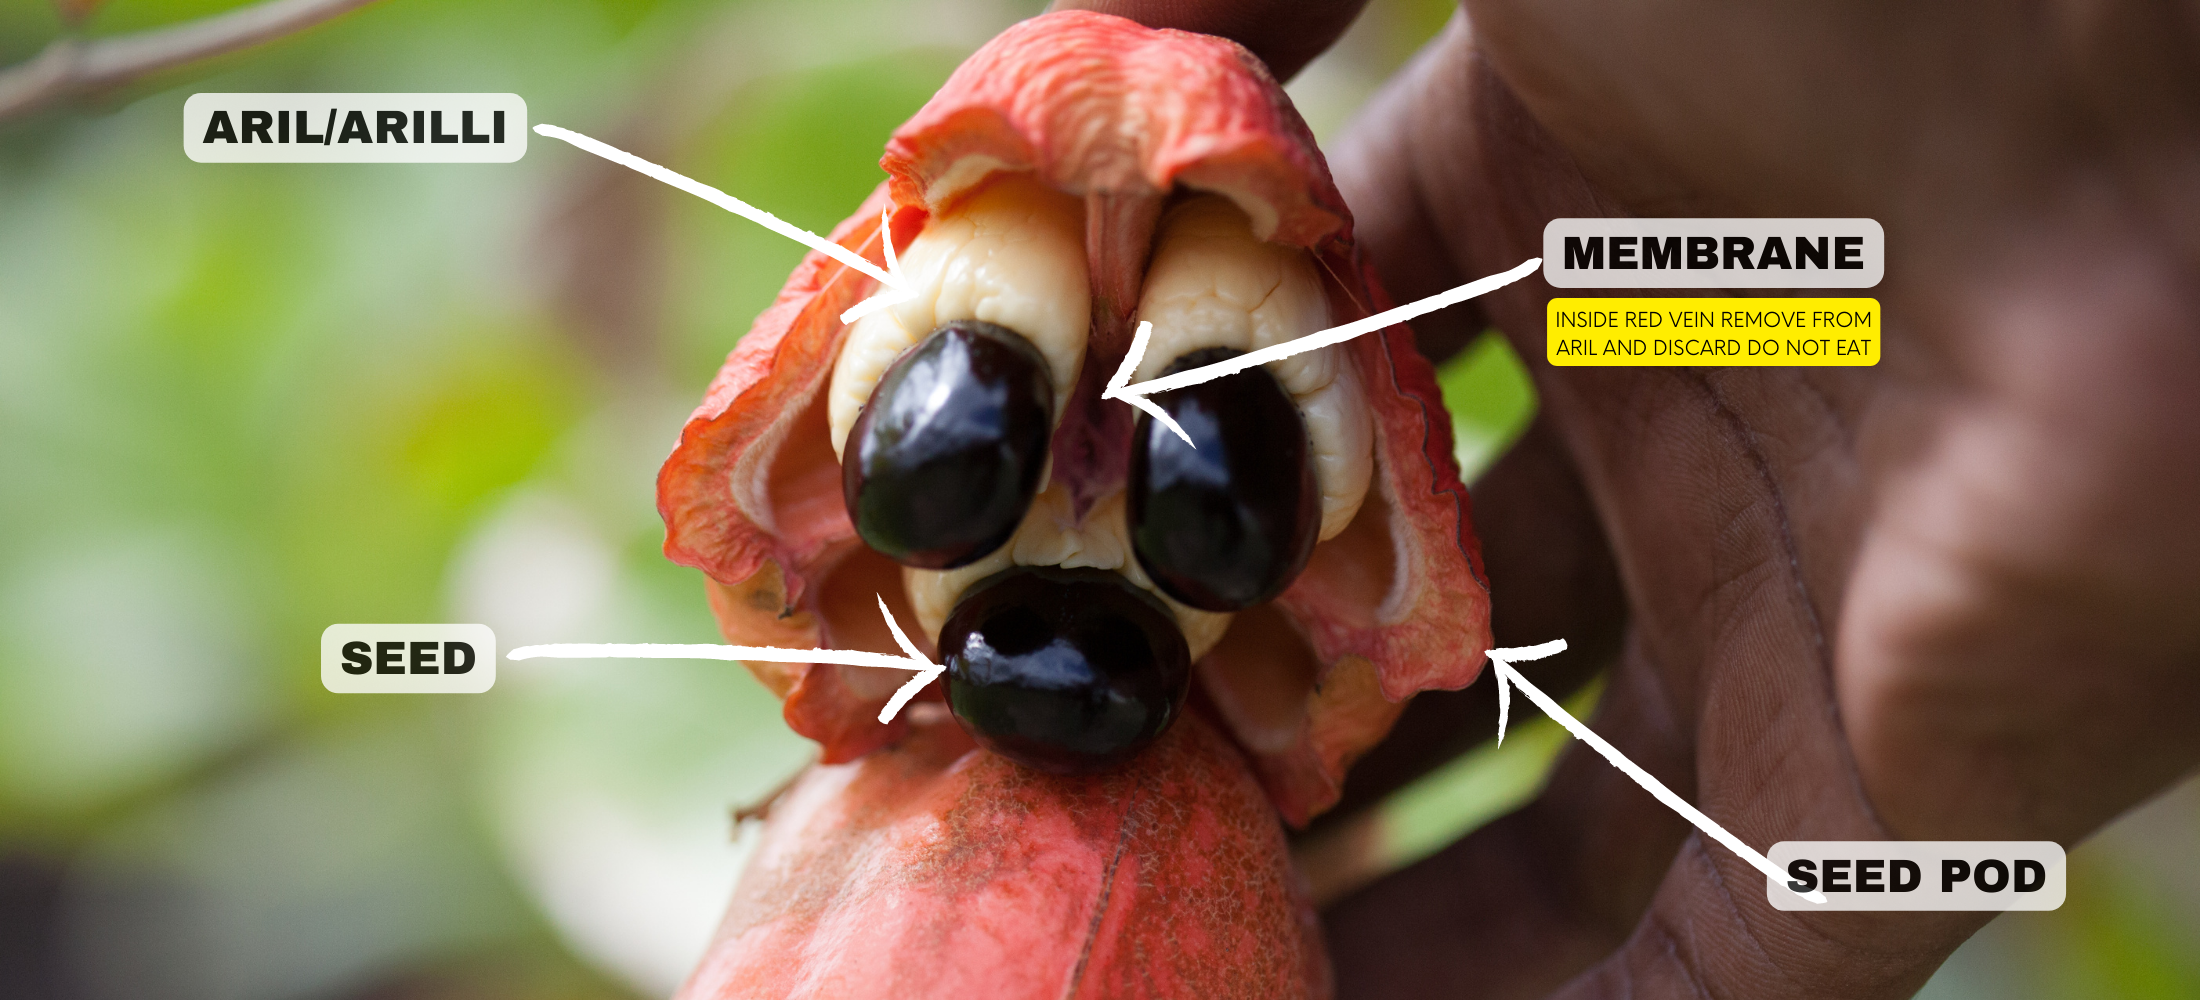 Misstee blog, Jamaican Ackee & Saltfish. Parts of ackee fruit explained